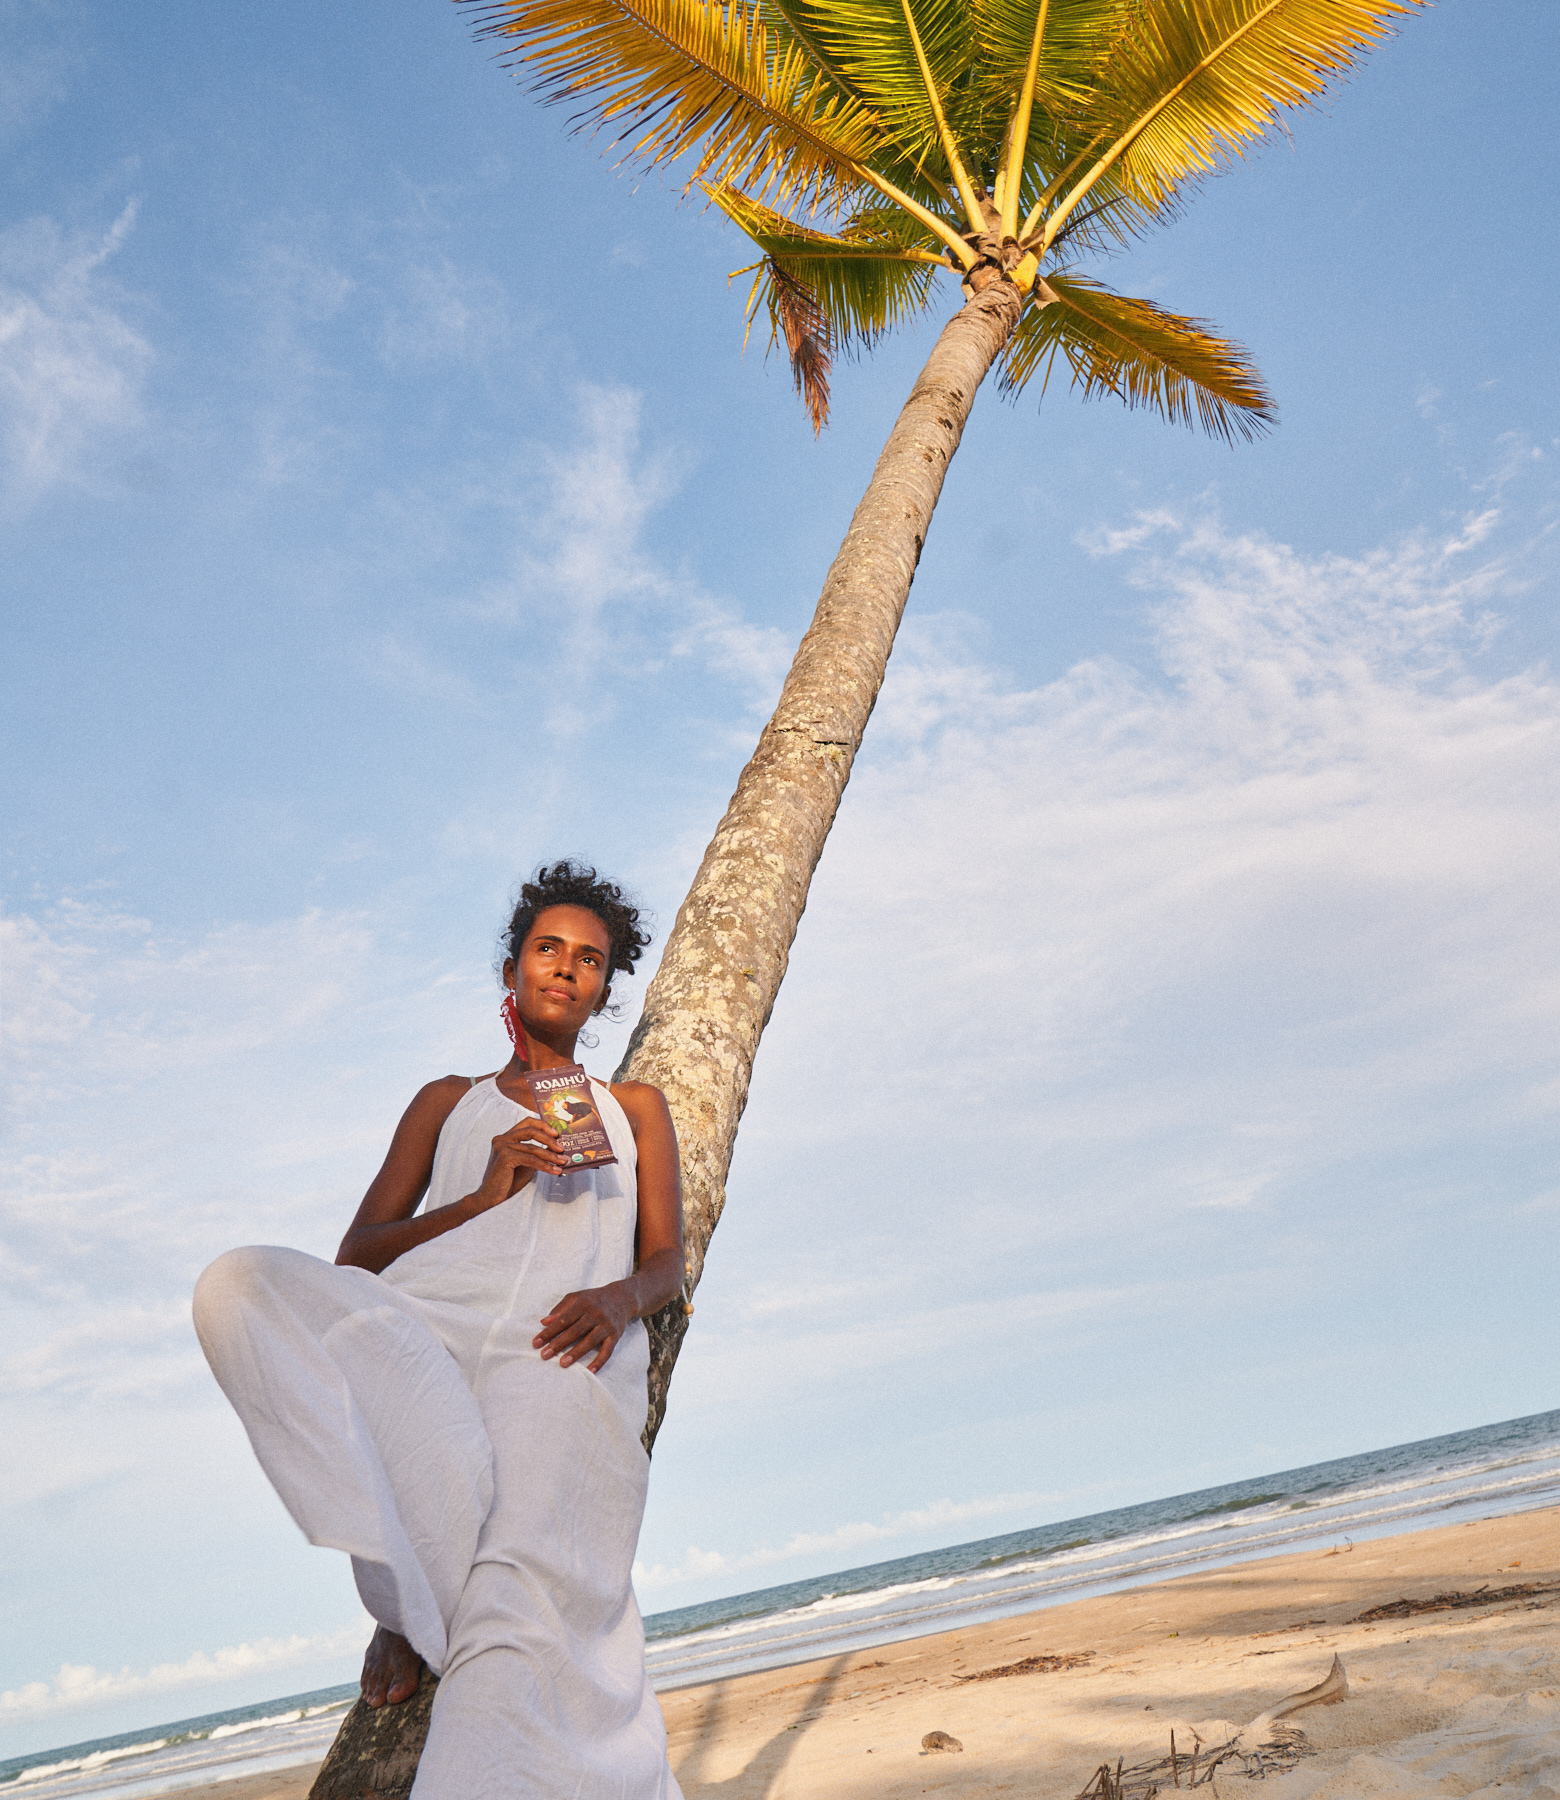 JOAIHÚ chocolate from Bahia, Brazil, woman on beach with palm tree. Production shoot.